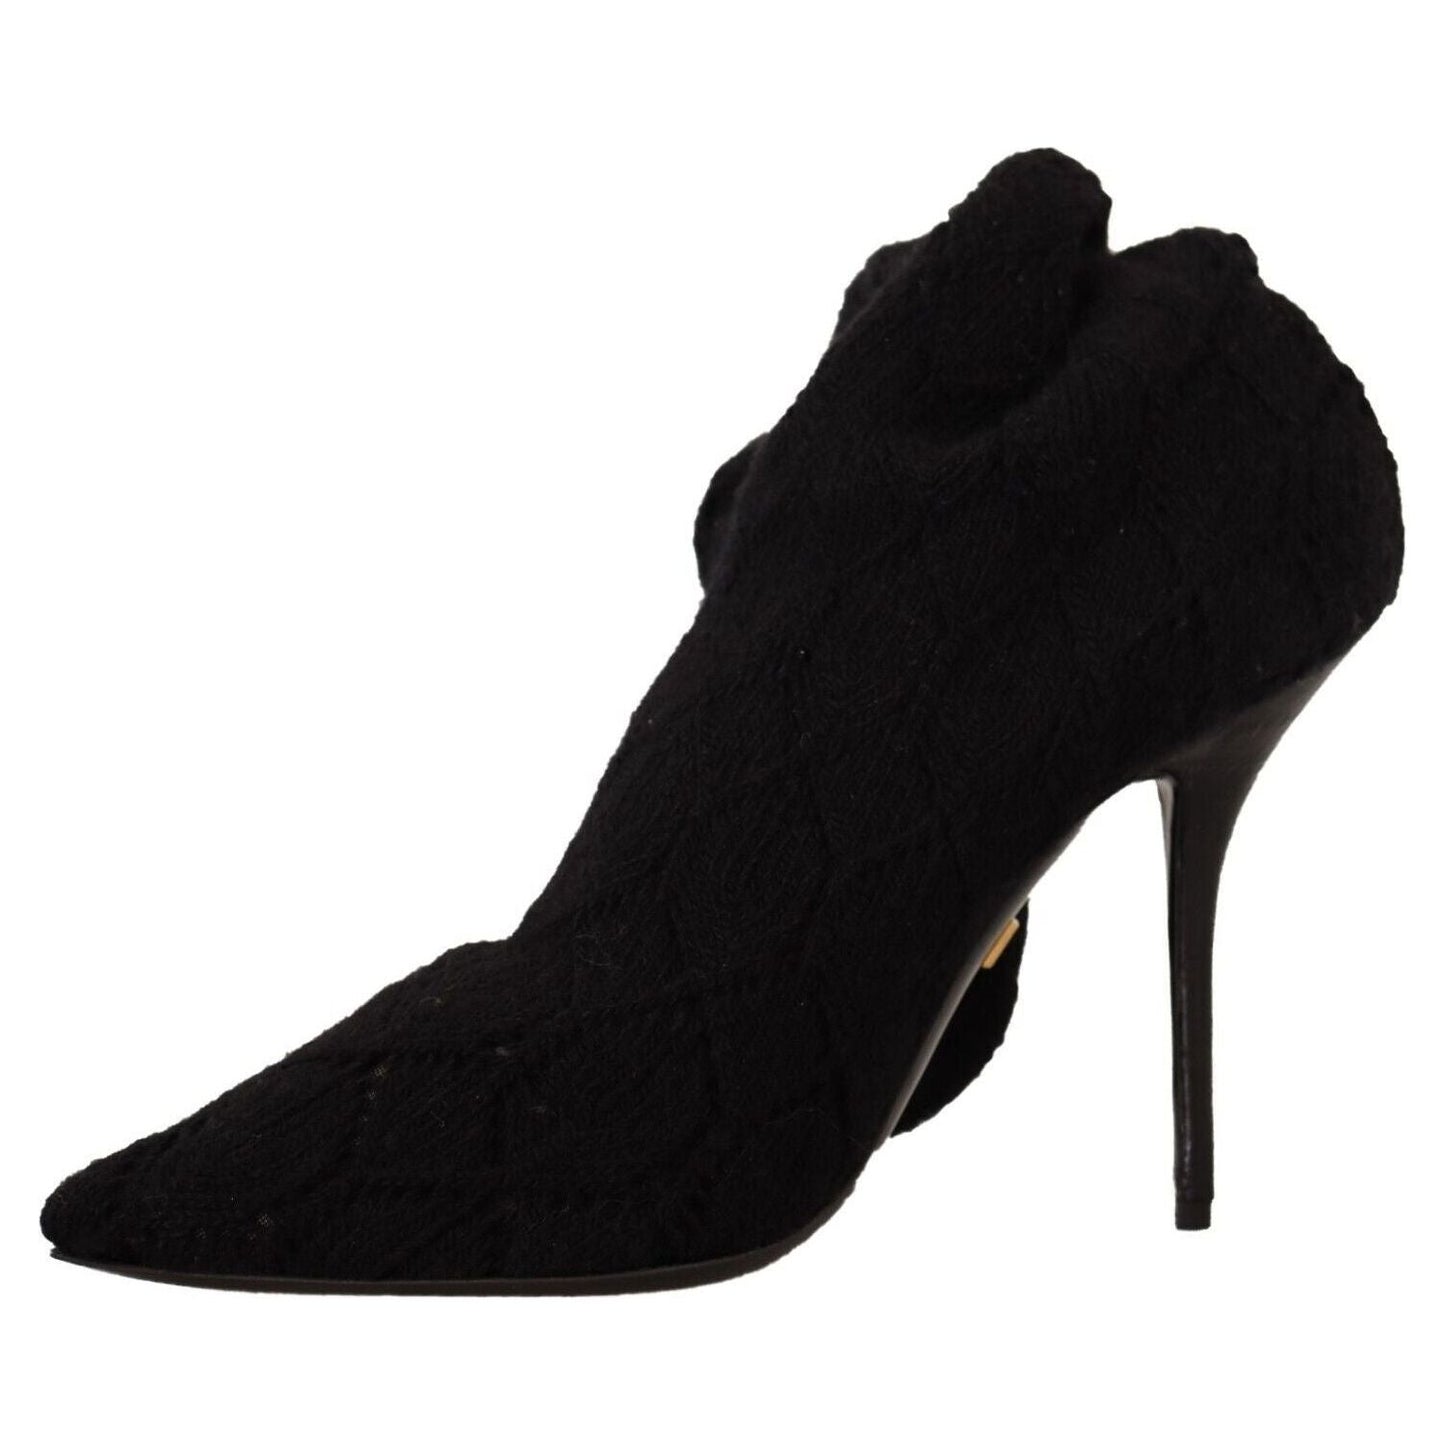 Dolce & Gabbana Elegant Black Stretch Socks Boots black-stretch-socks-knee-high-booties-shoes-1